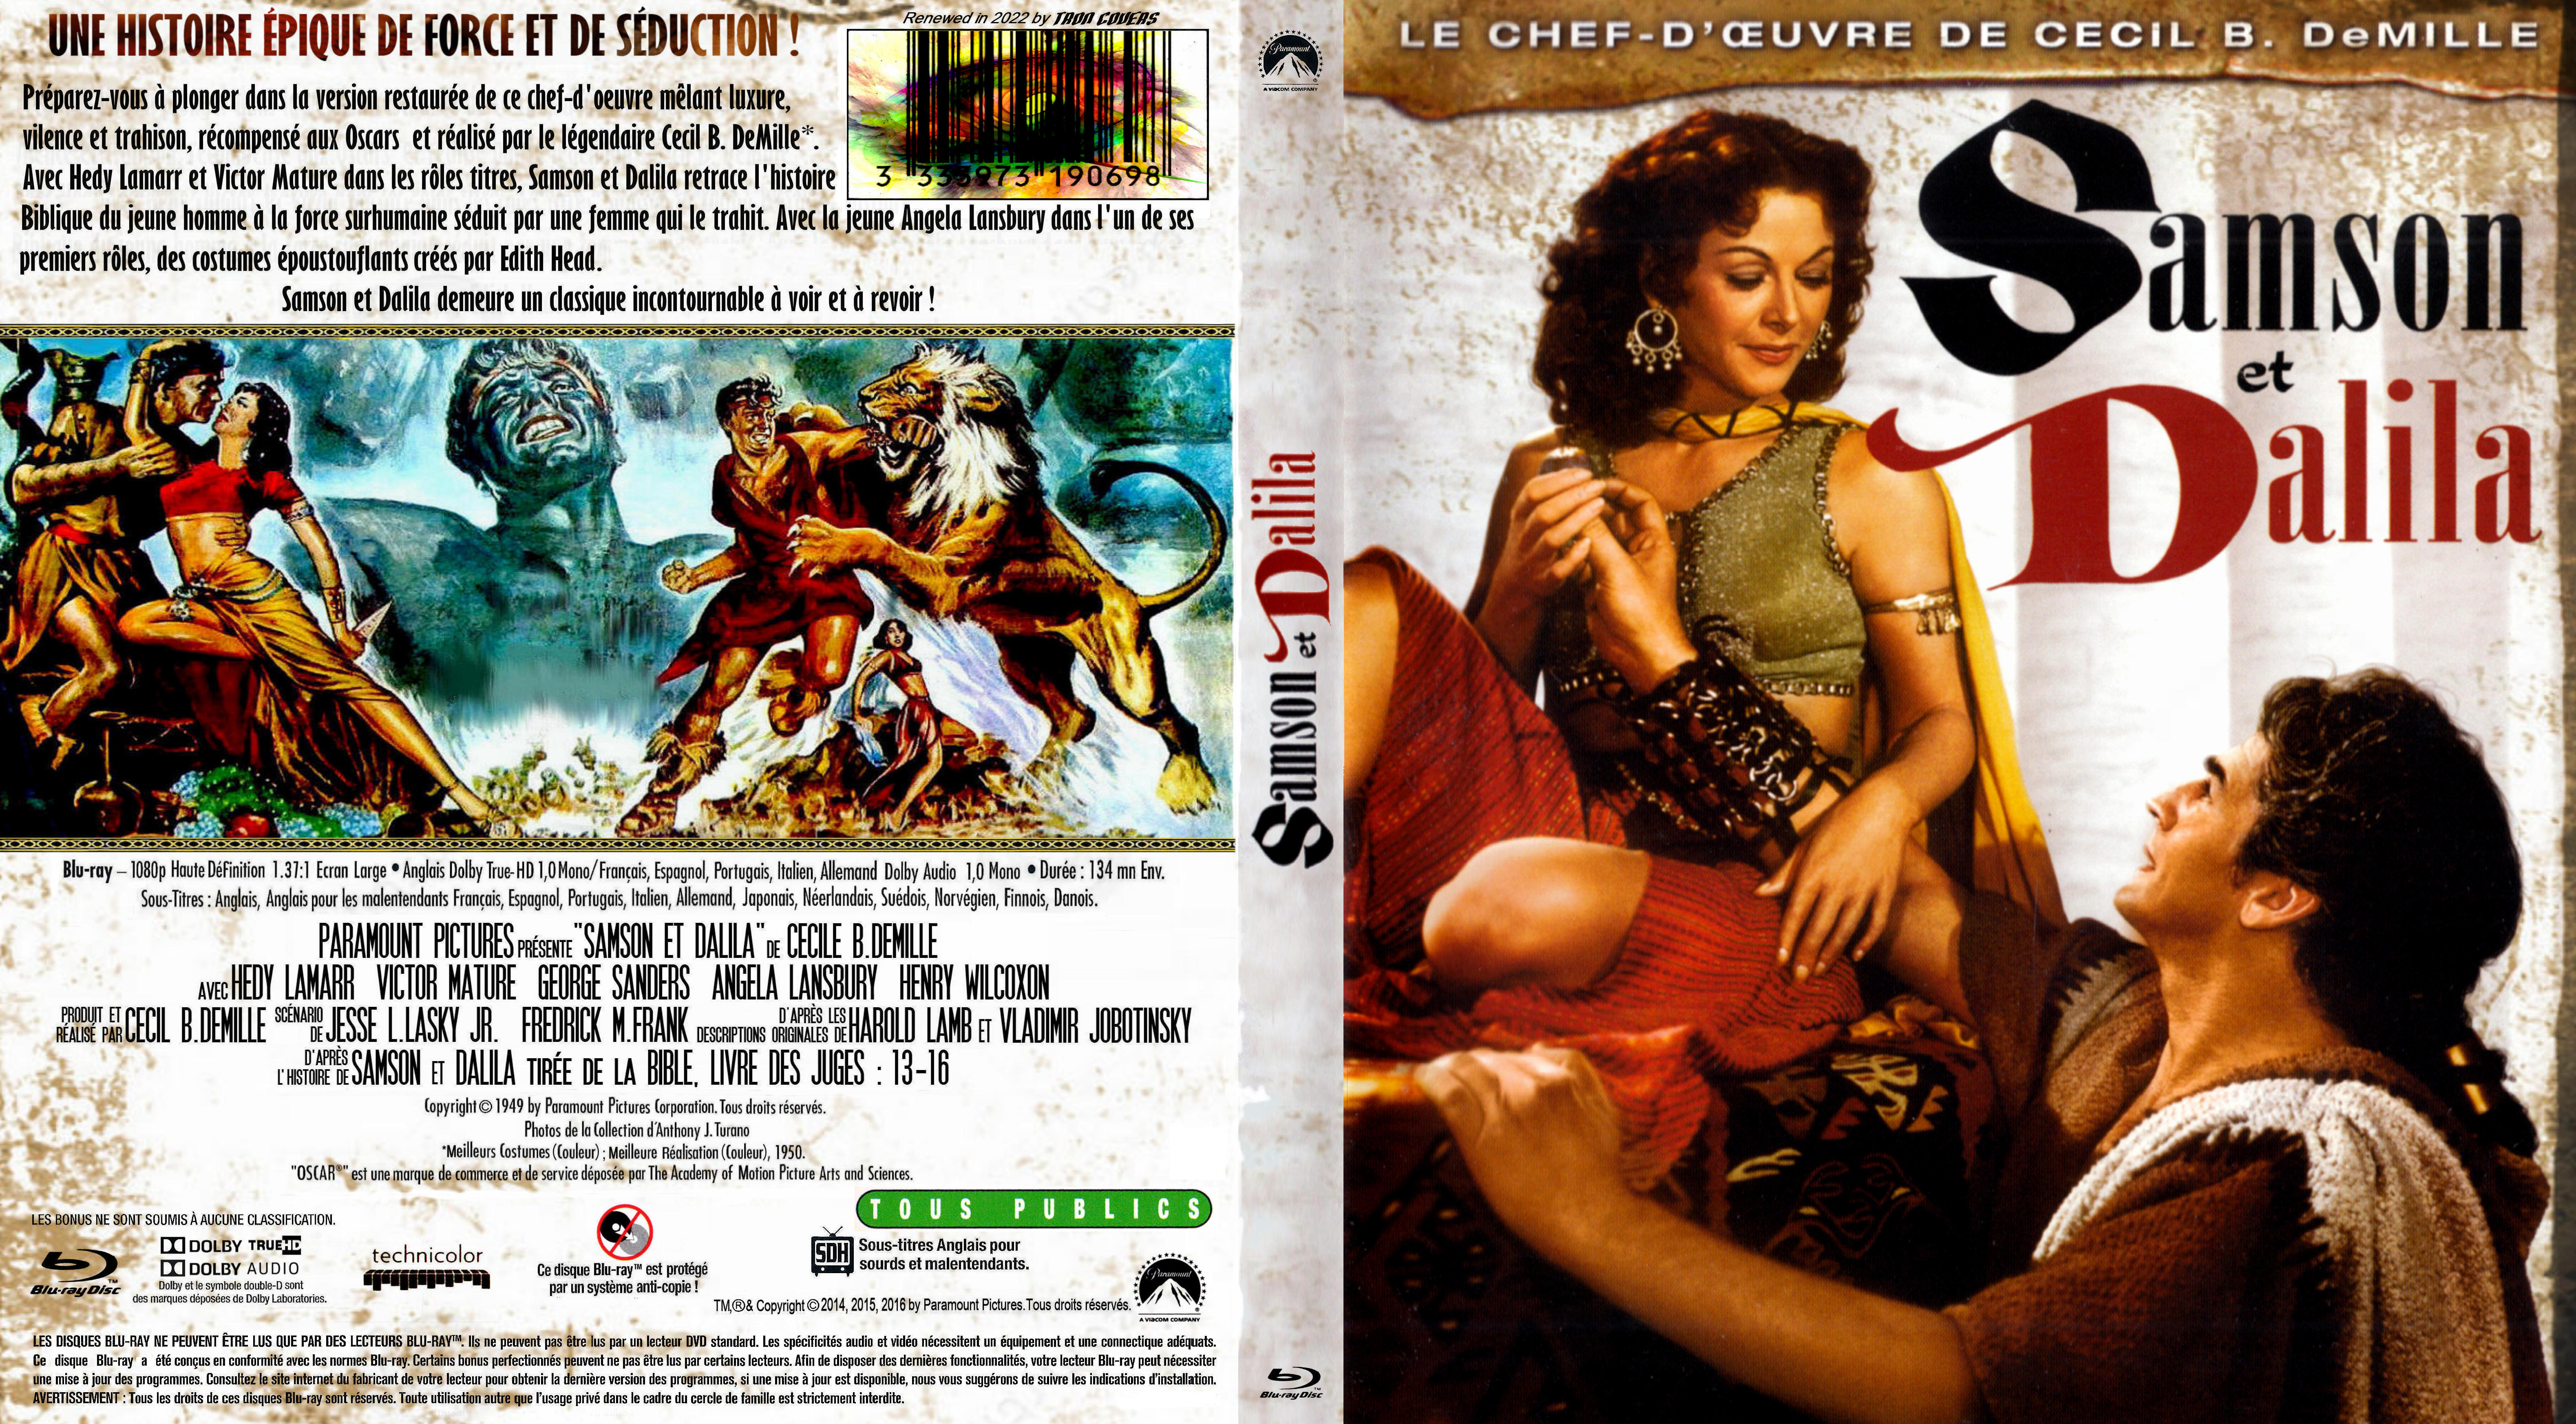 Jaquette DVD Samson et Dalila custom (BLU-RAY) v2